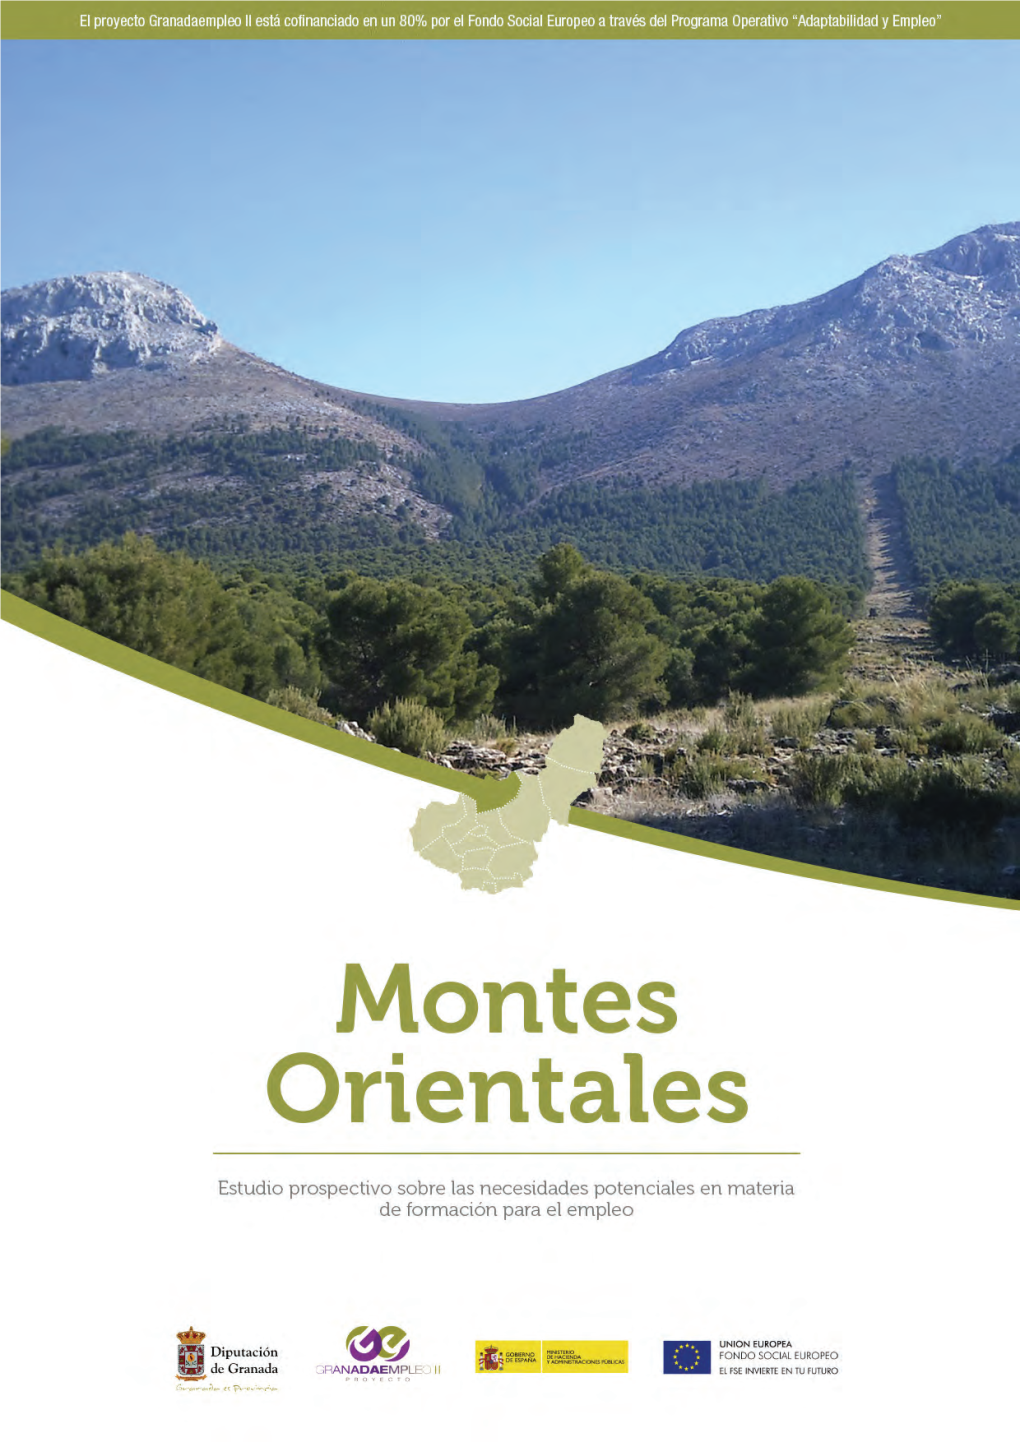 Montes Orientales V2.Indd